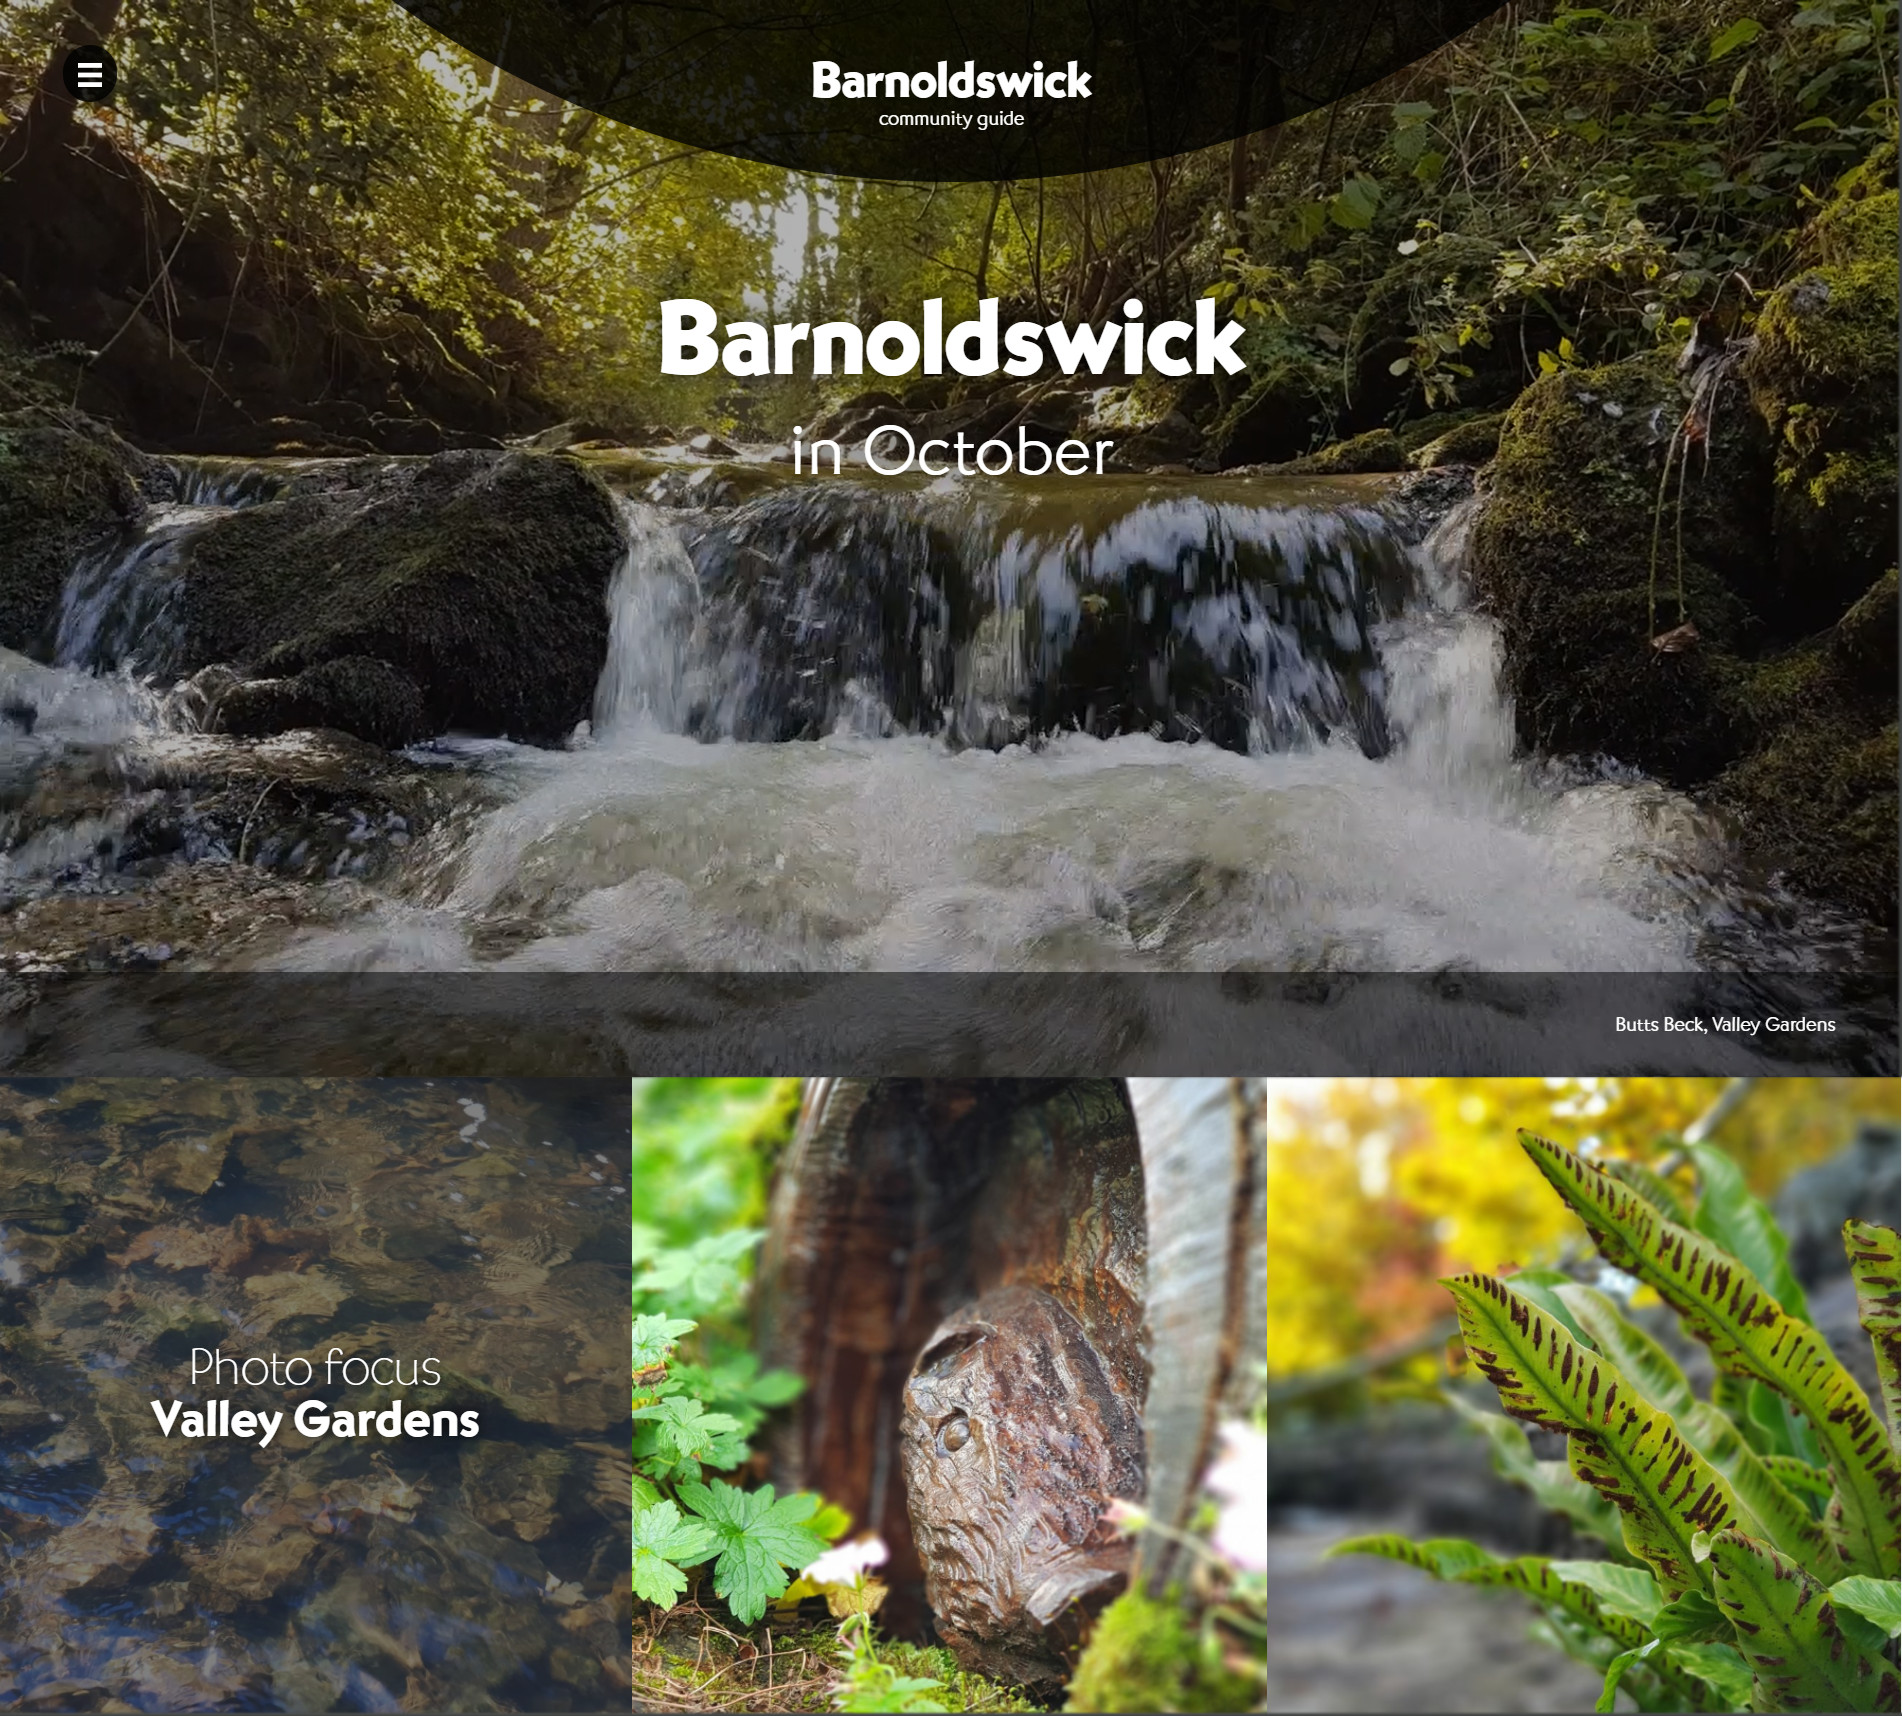 (c) Barnoldswick.uk